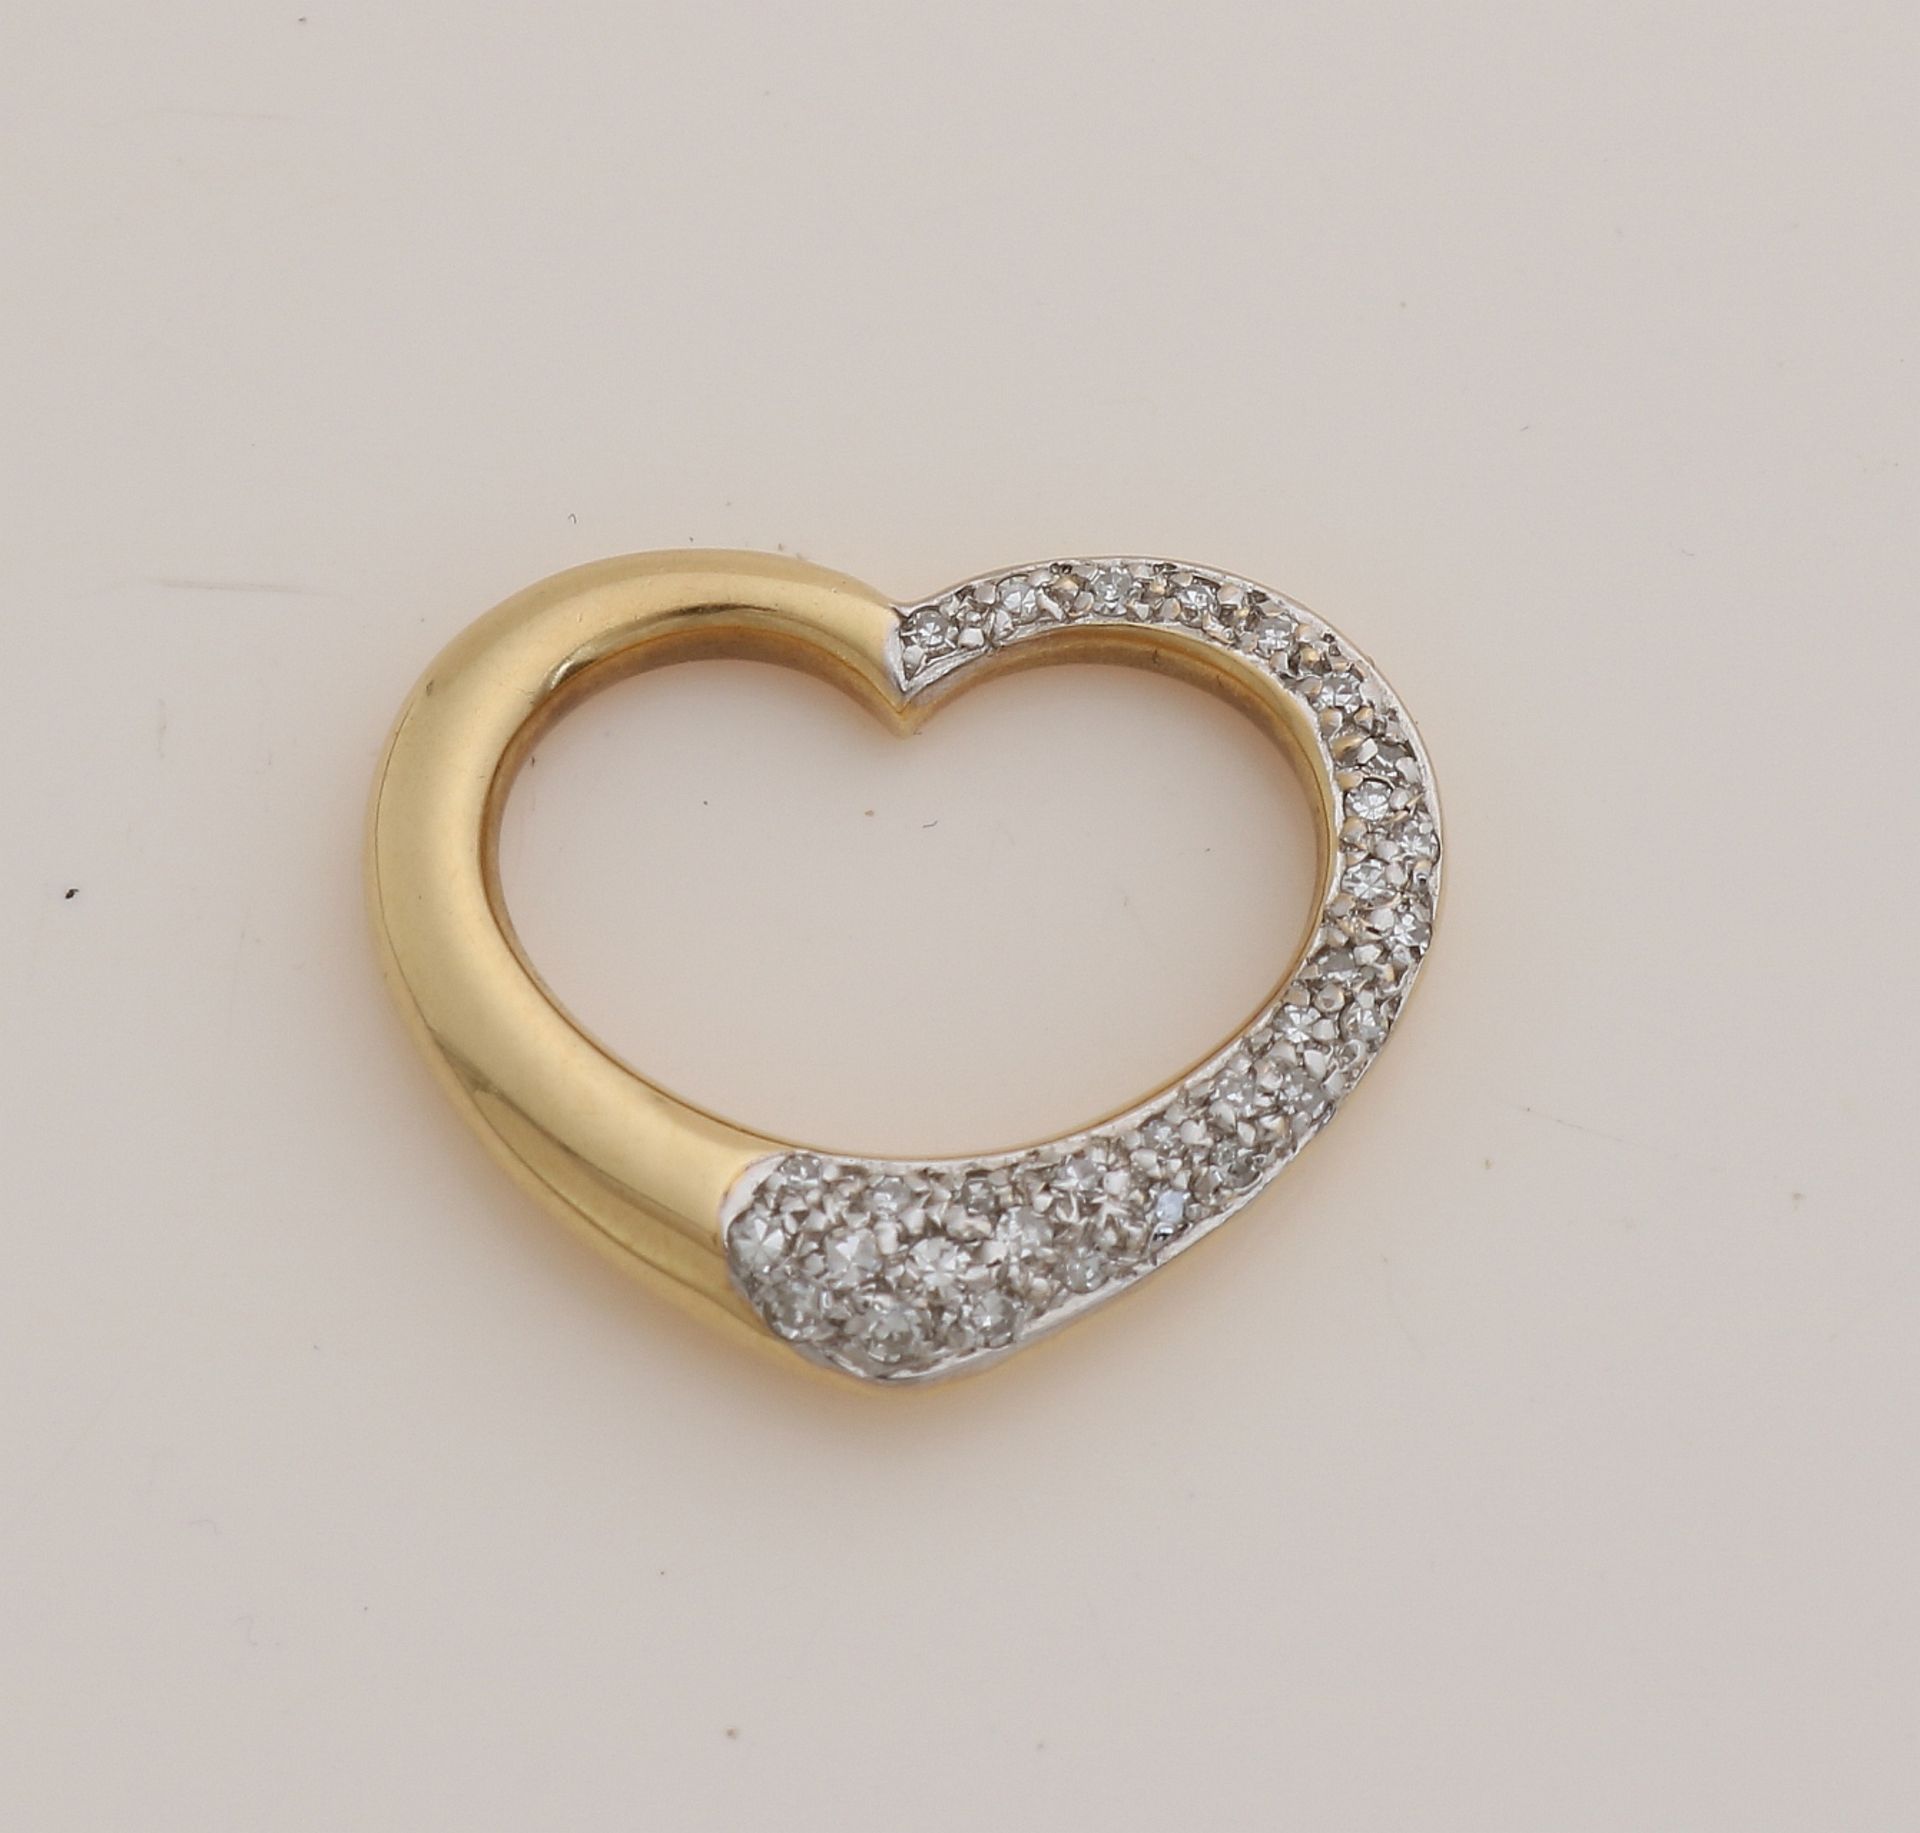 Gold heart shape pendant with diamond